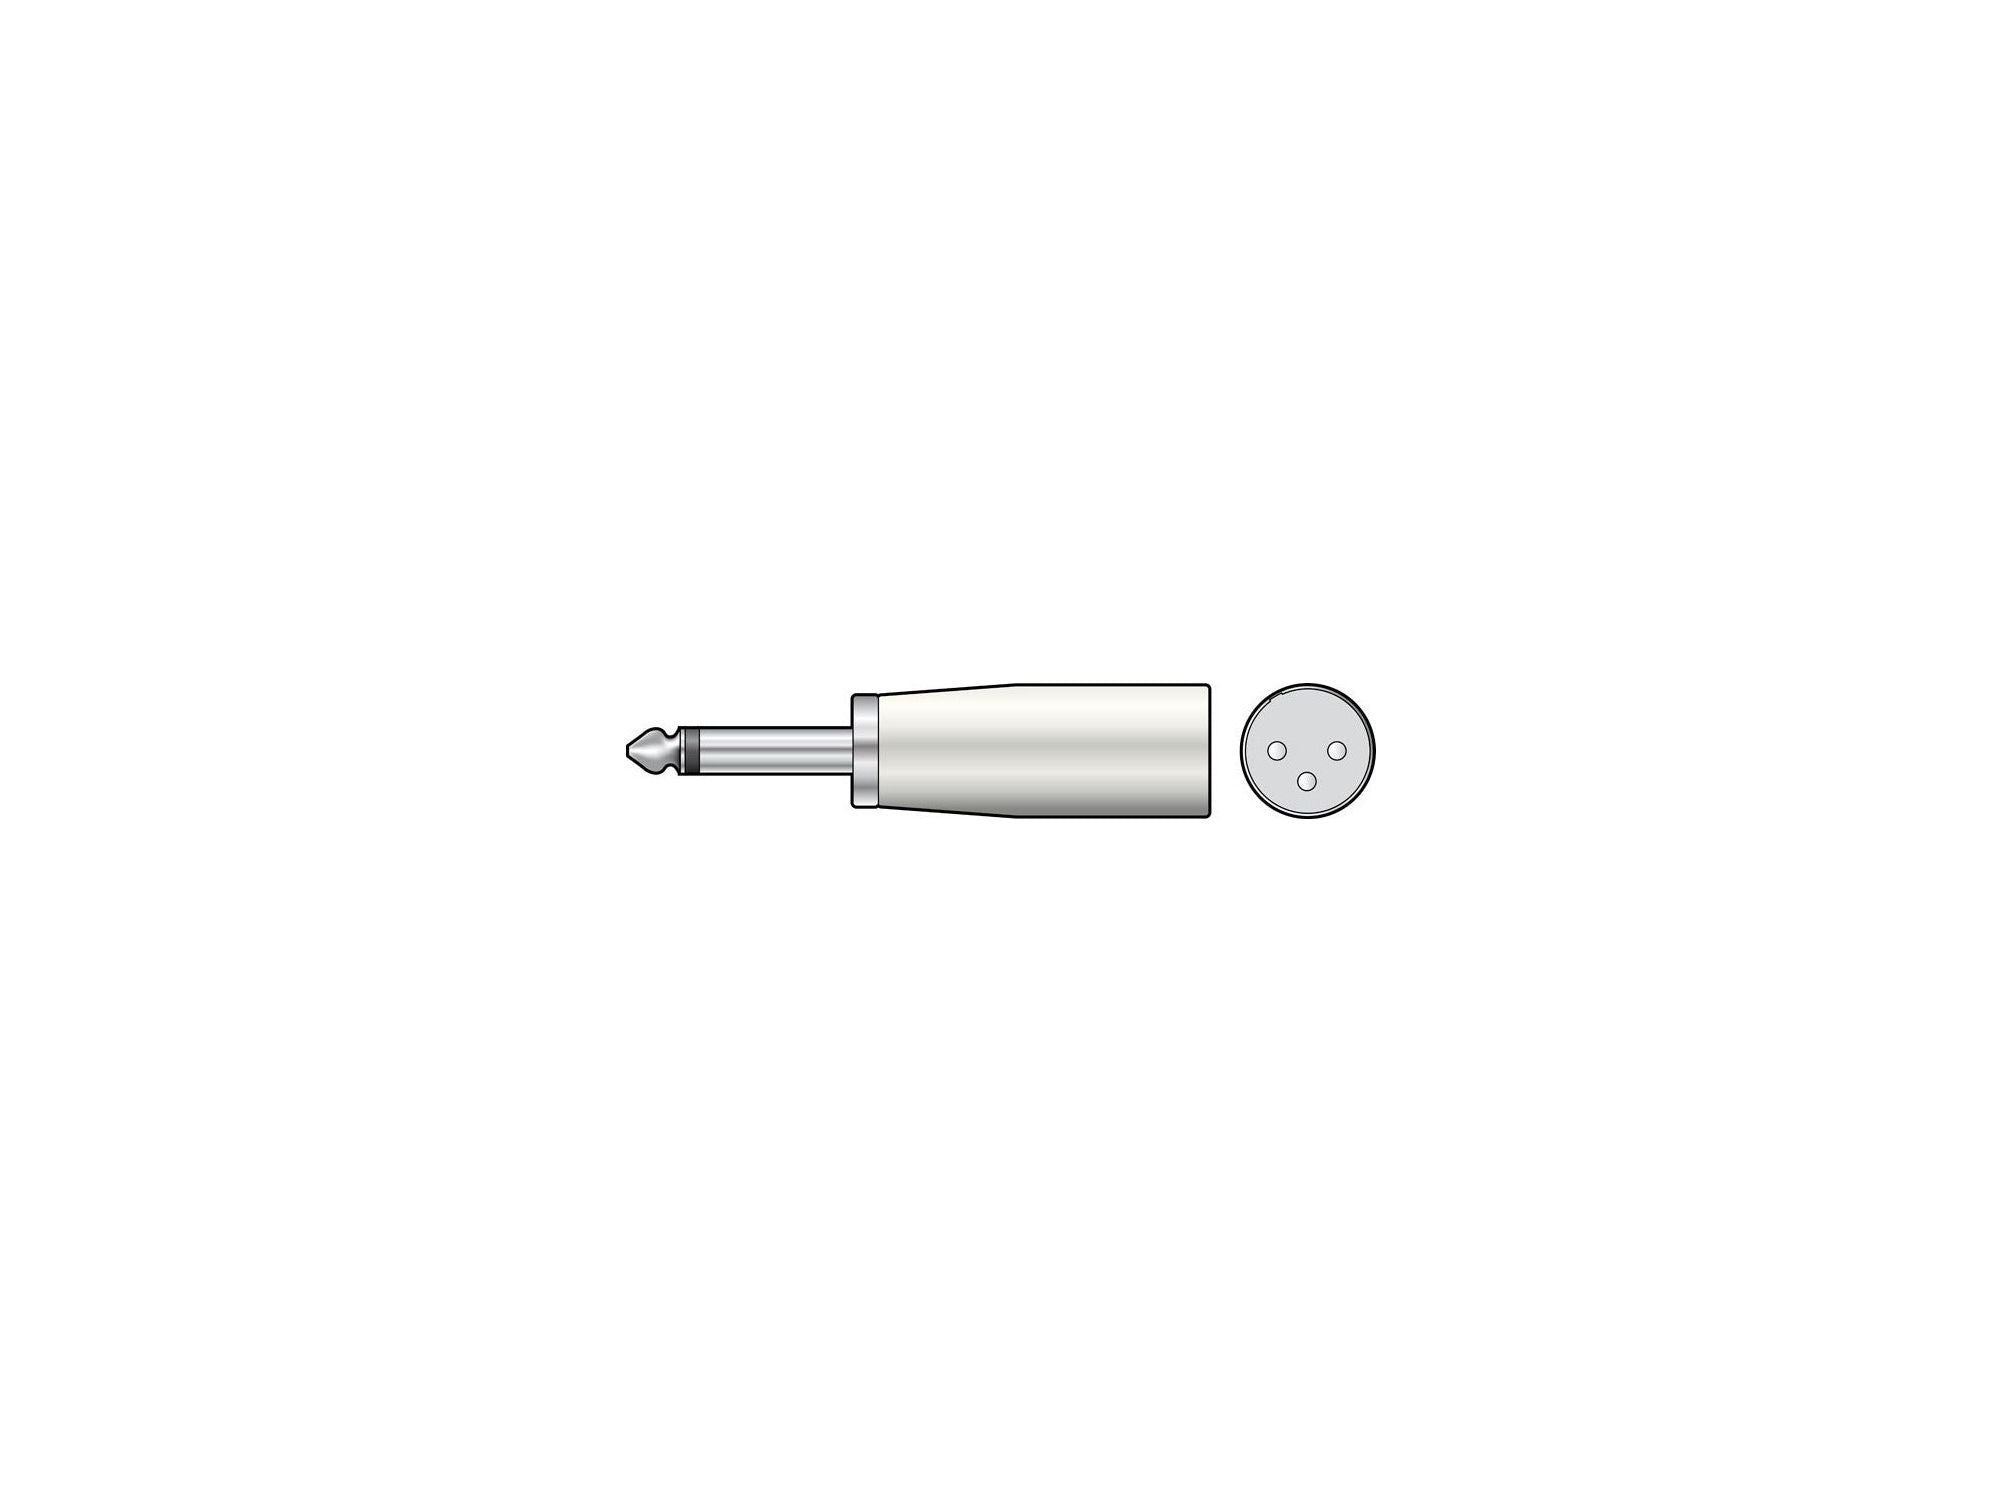 Adaptor 6.3mm Mono Jack Plug – 3-pin XLR Male